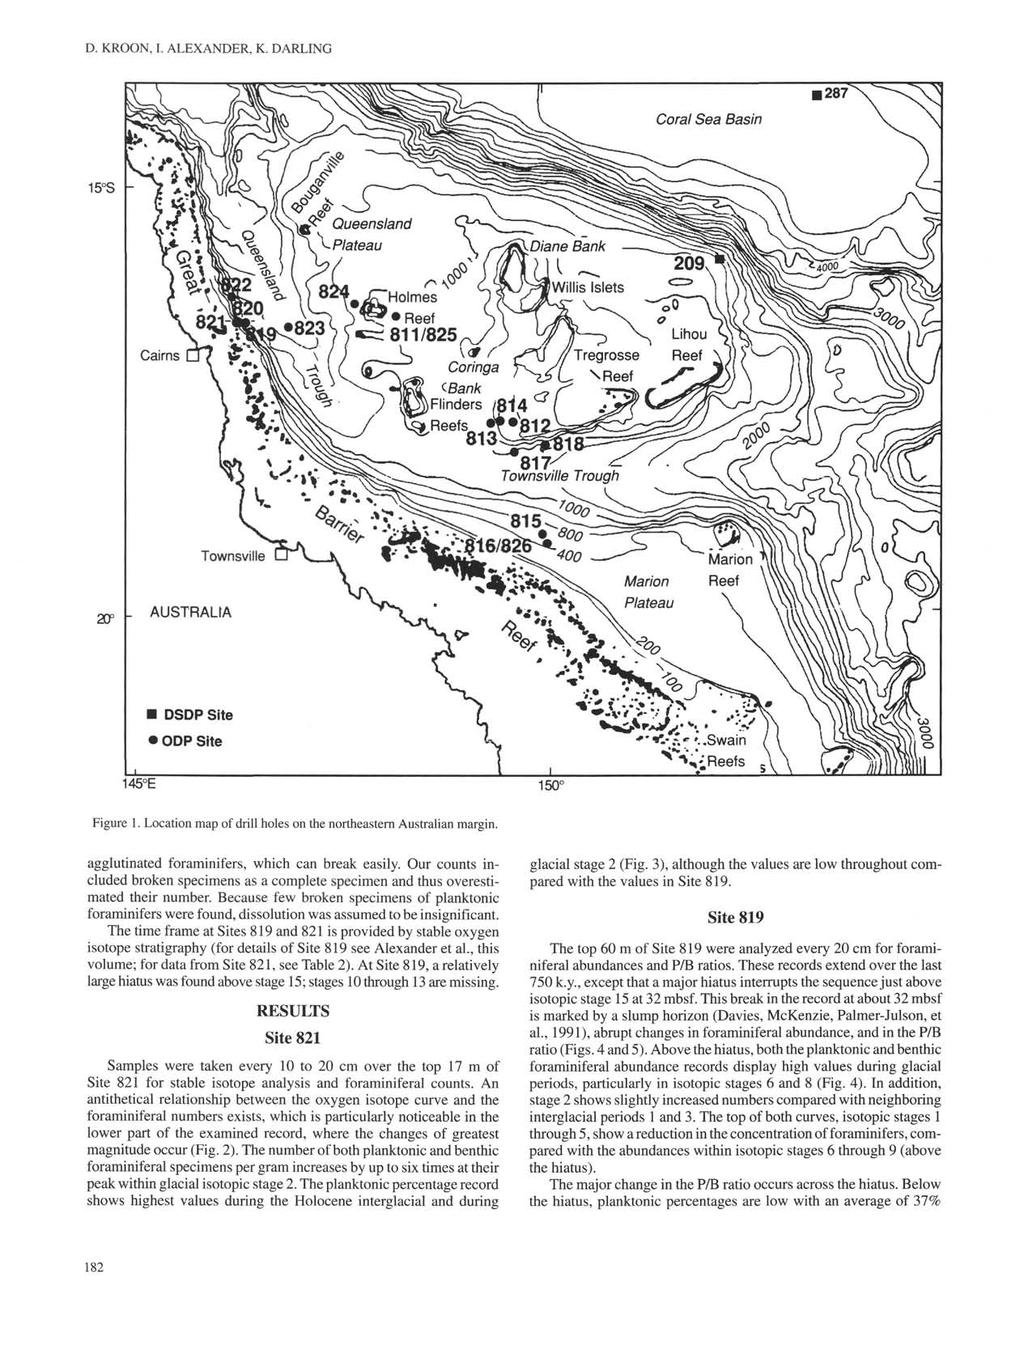 D. KROON, I. ALEXANDER, K. DARLING 15 S Holmes Reef 811/825, v Coringa (Bank Flinders 817 Townsville Trough 145 E Figure 1. Location map of drill holes on the northeastern Australian margin.